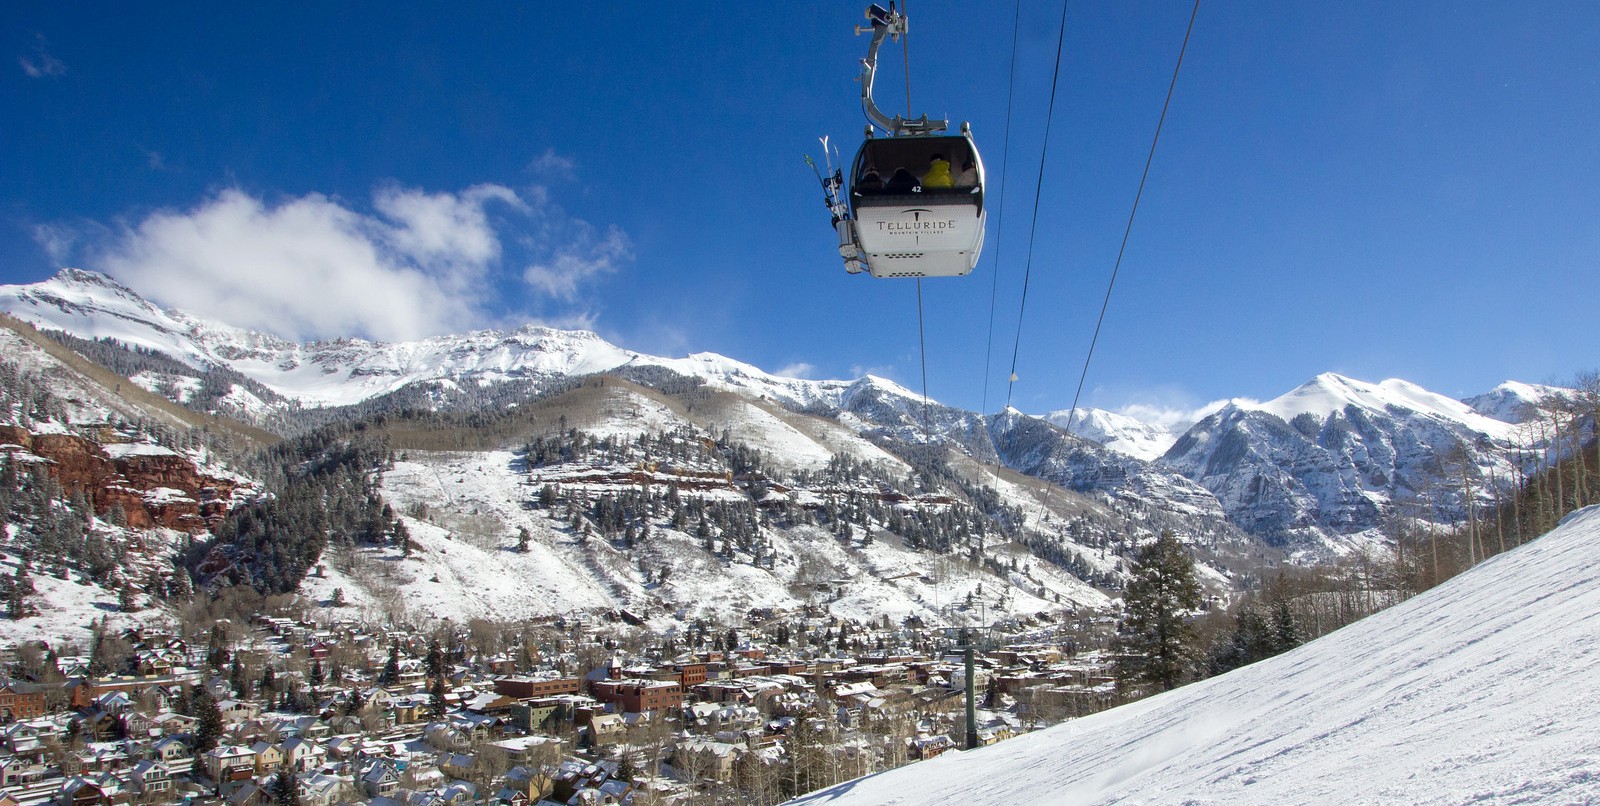 ski tour operators list